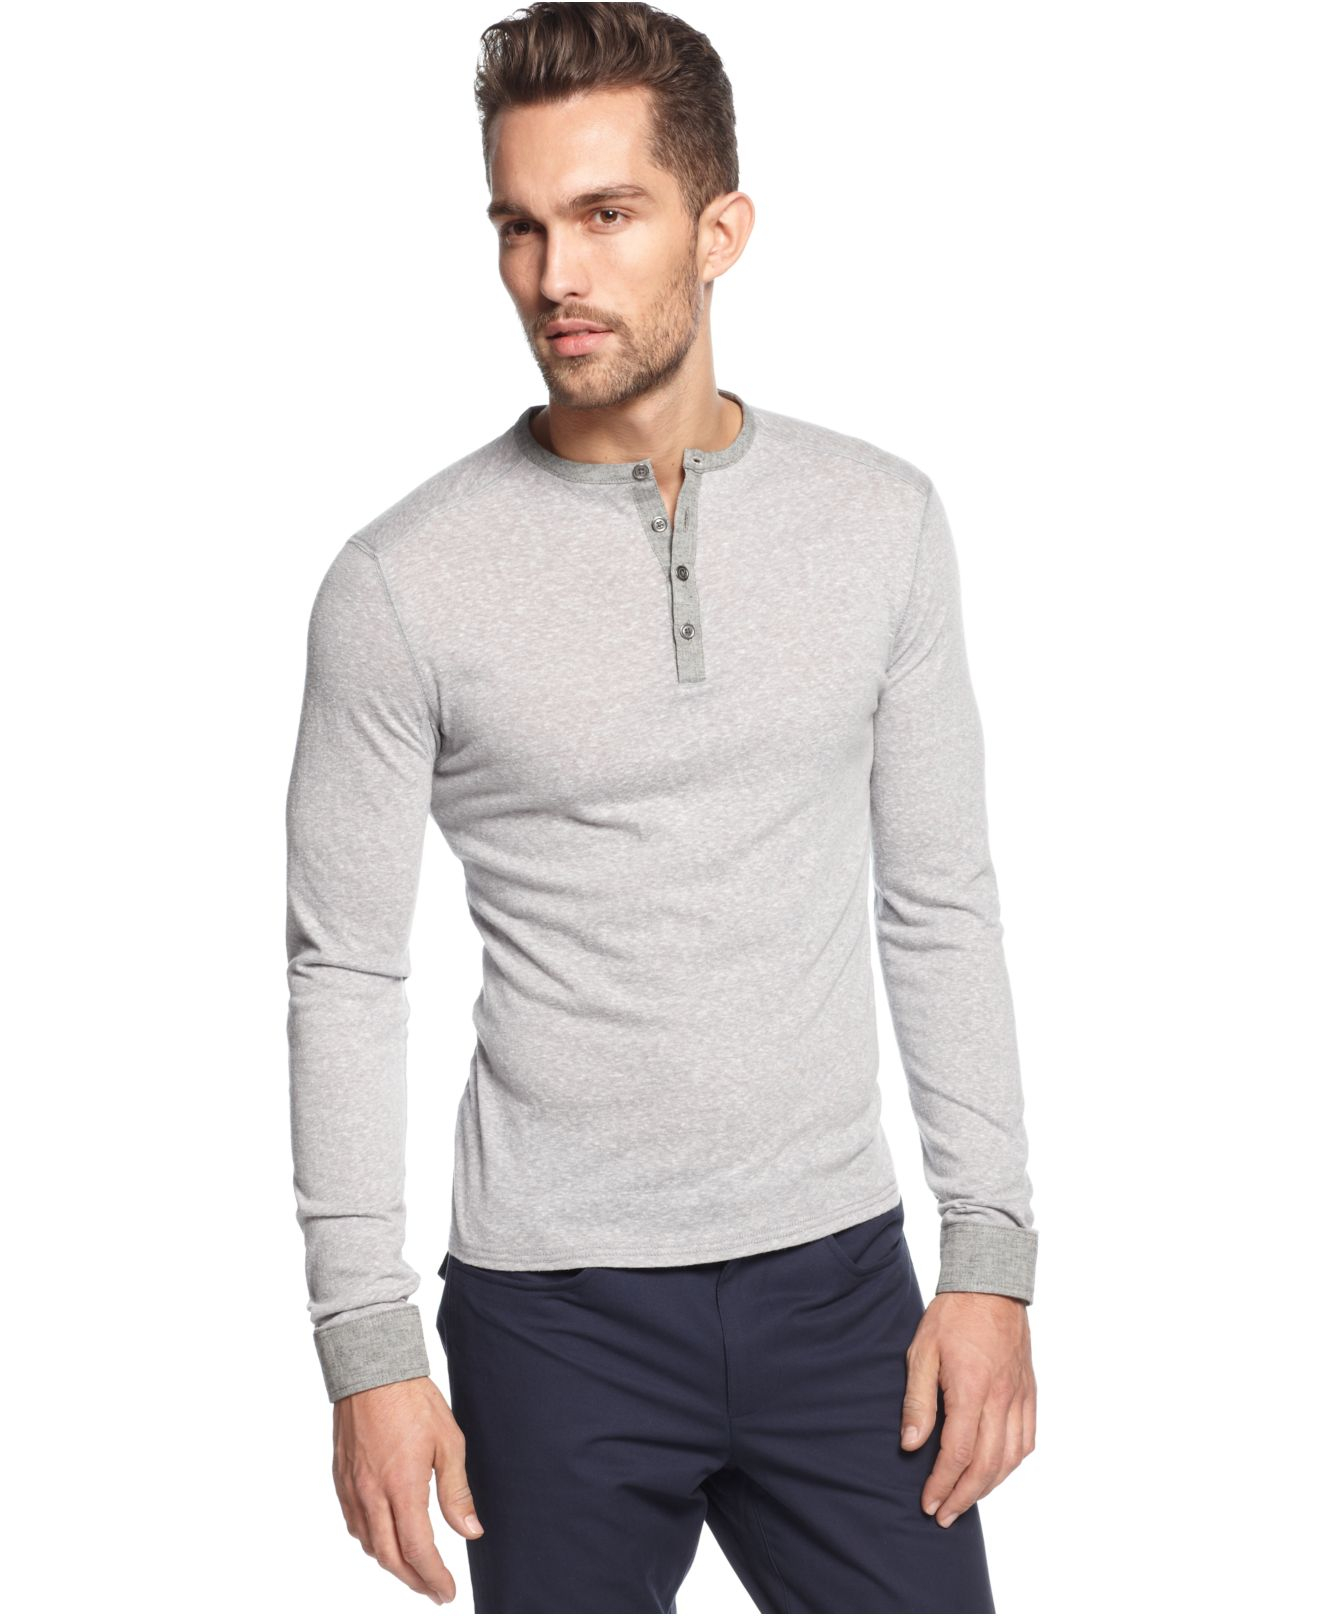 Lyst - Vince Camuto Slimfit Longsleeve Henley Shirt in Gray for Men